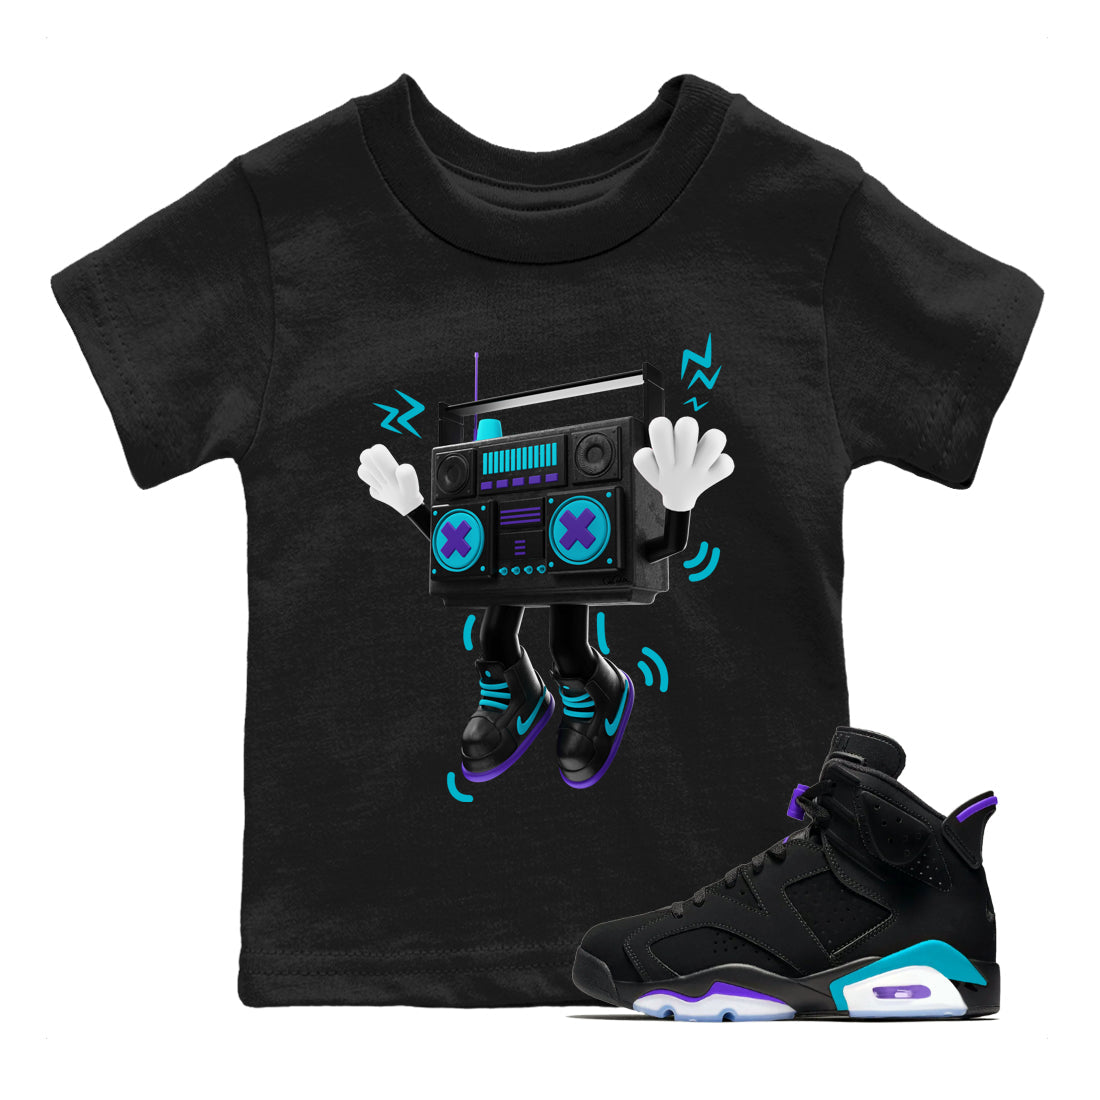 Air Jordan 6 Aqua Sneaker Match Tees 90s Radio Boy Sneaker Tees AJ6 Aqua Sneaker Release Tees Kids Shirts Black 1